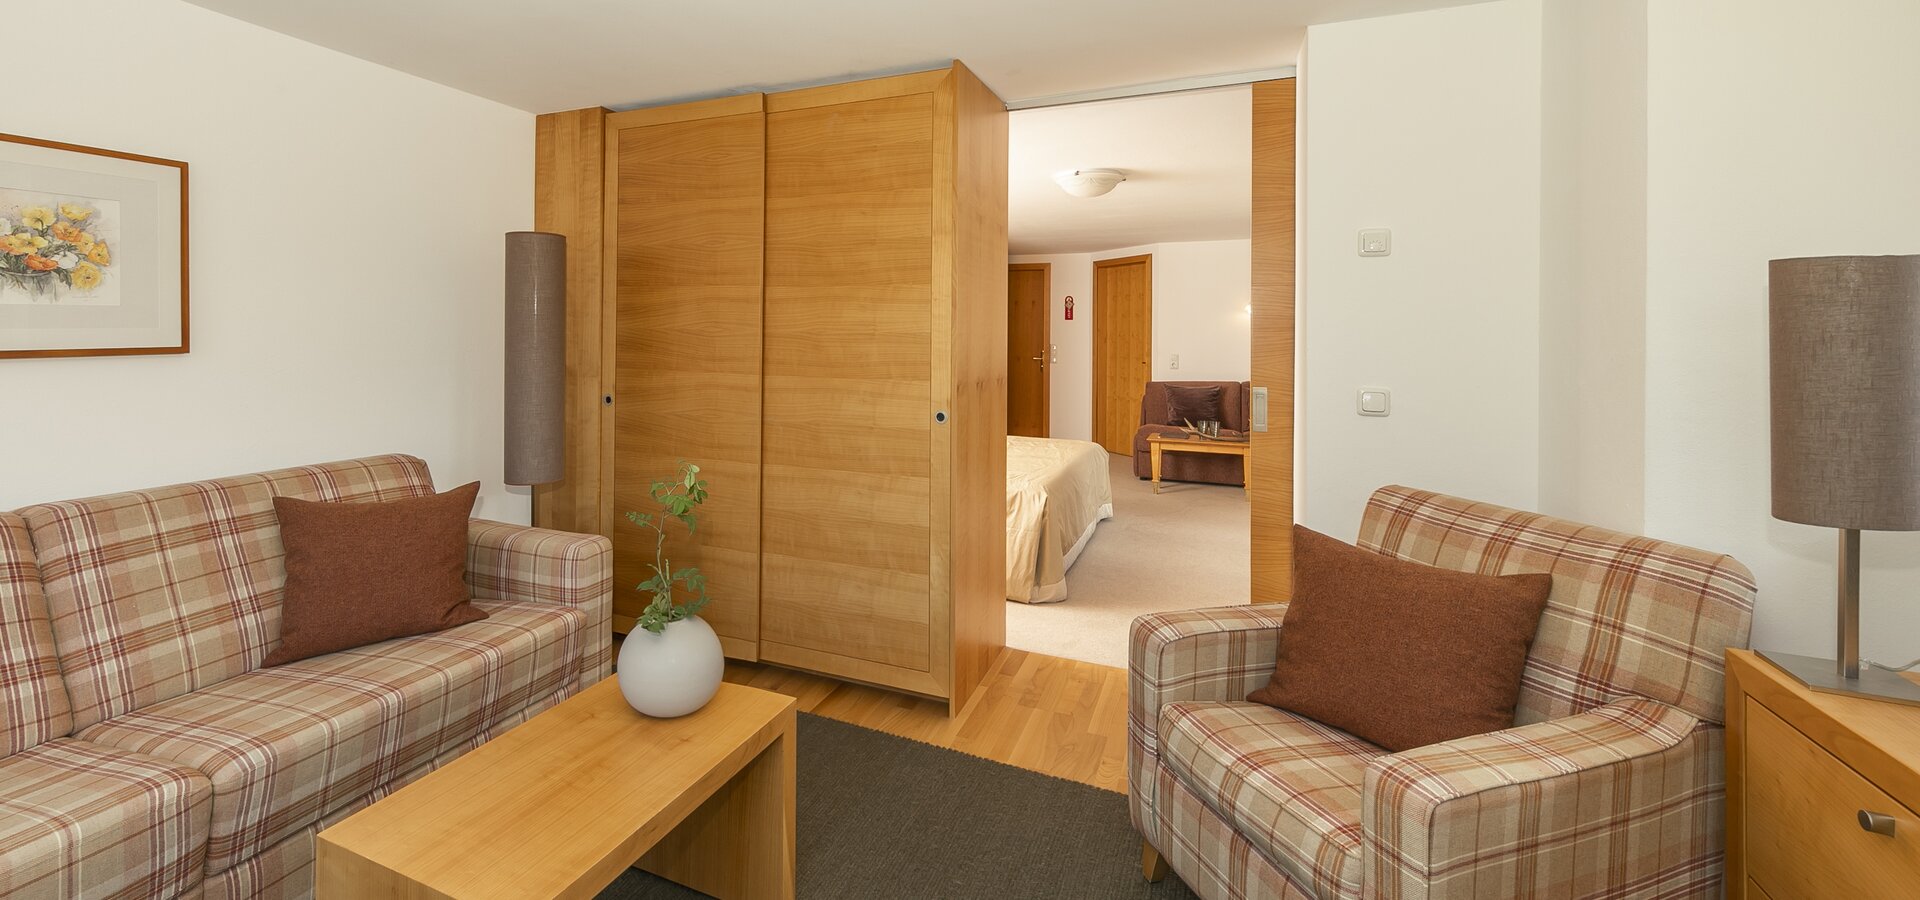 Vorarlberg hotel room